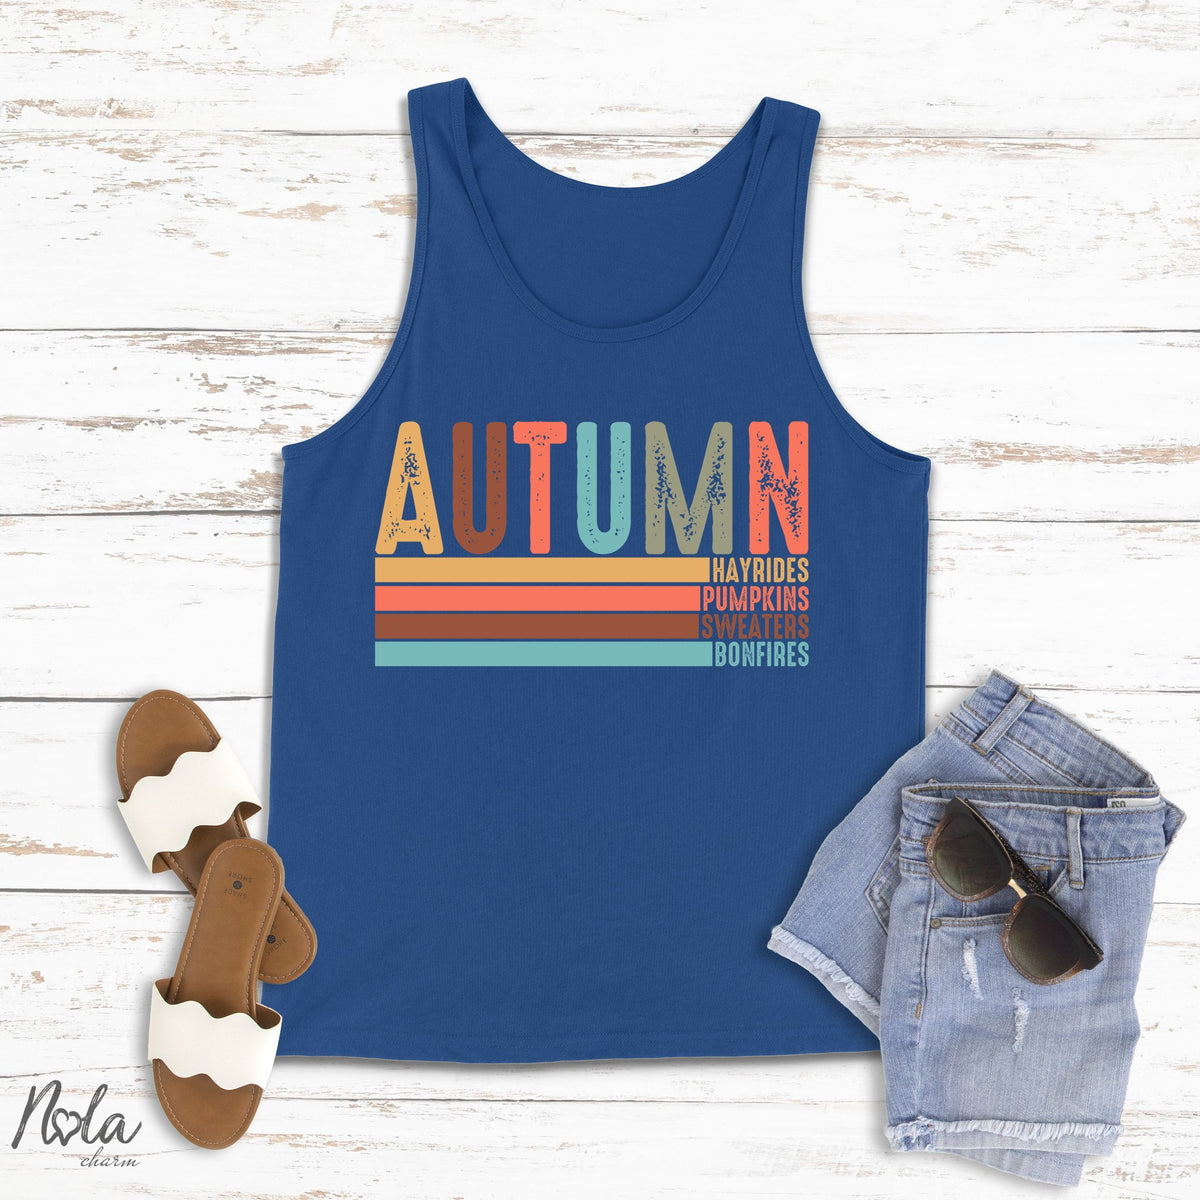 Autumn Hayrides Pumpkins Sweaters Bonfires - Nola Charm